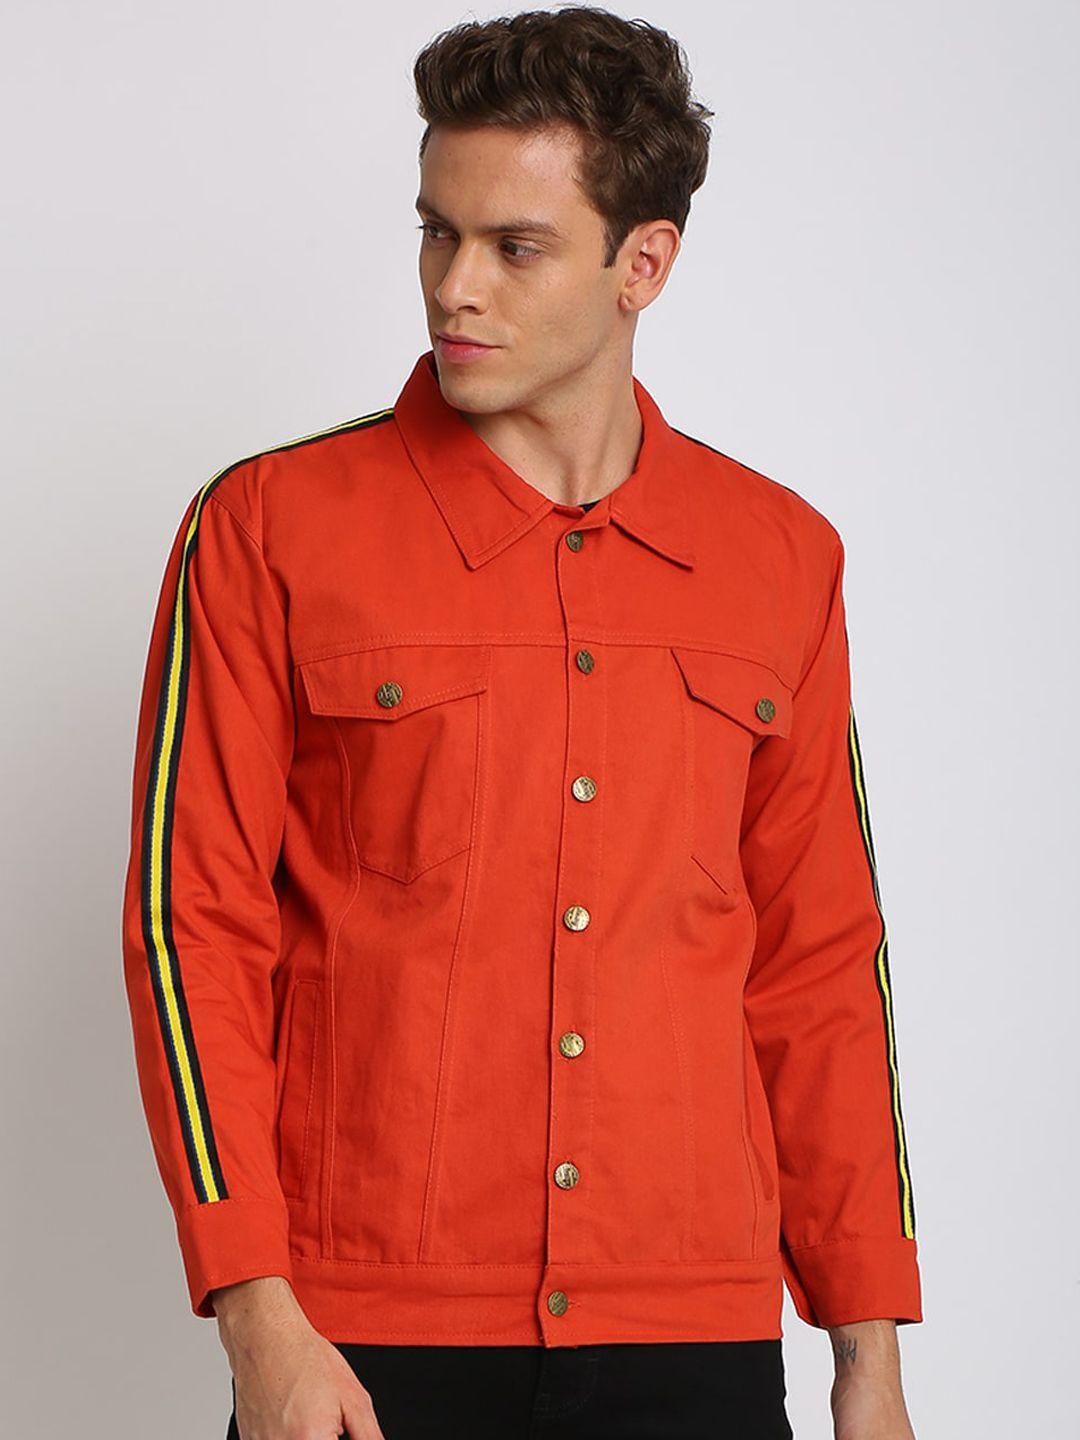 voxati-men-orange-solid-tailored-jacket